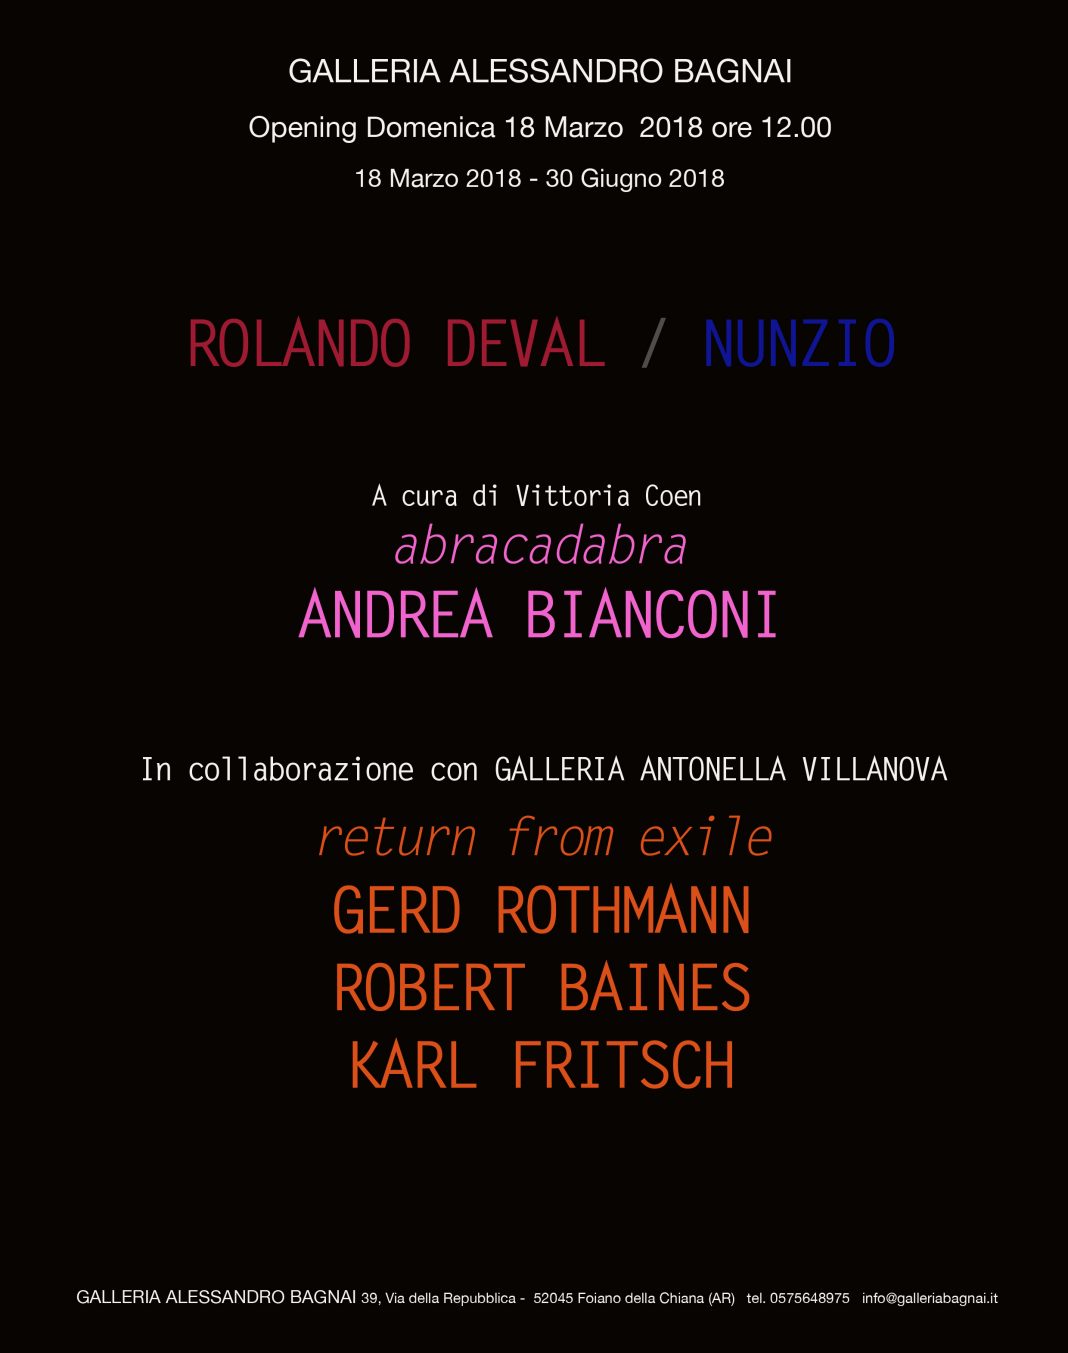 Rolando Deval / Nunzio + Andrea Bianconi / Abracadabra + 
Return from Exilehttps://www.exibart.com/repository/media/eventi/2018/03/rolando-deval-nunzio-andrea-bianconi-abracadabra-return-from-exile-1068x1353.jpg